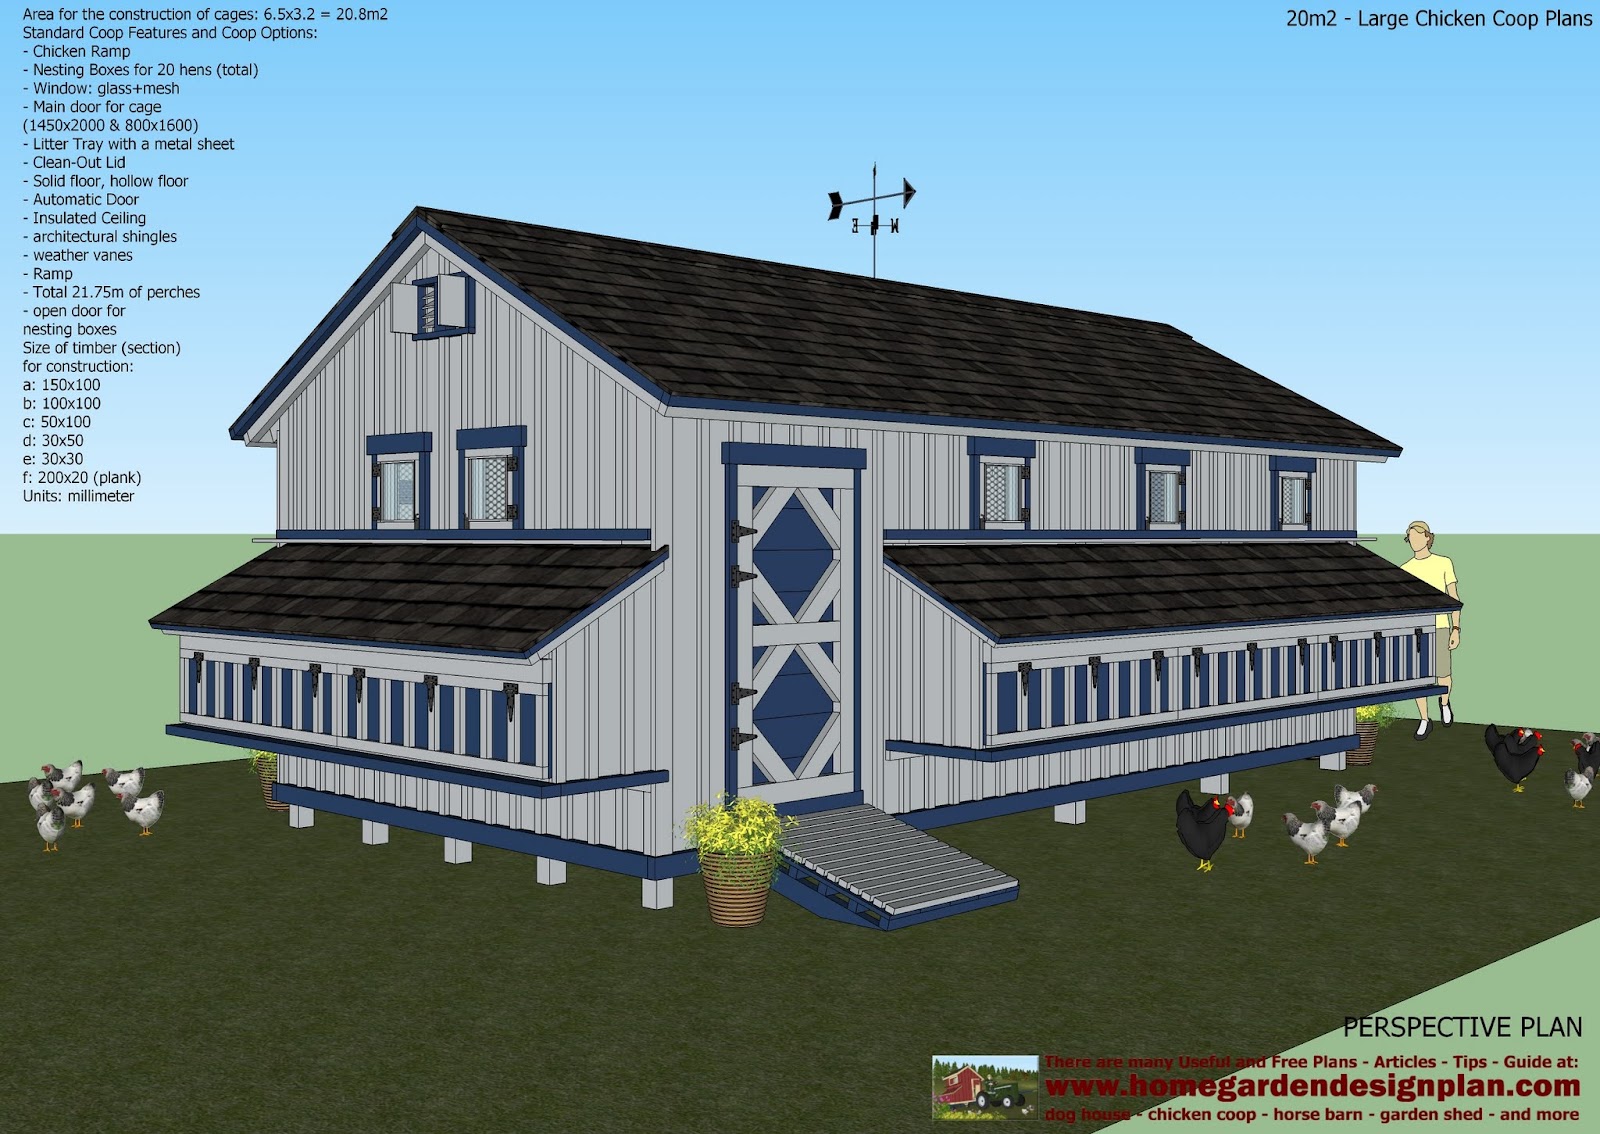  chicken coop plans - Chicken coop design - How to build a chicken coop